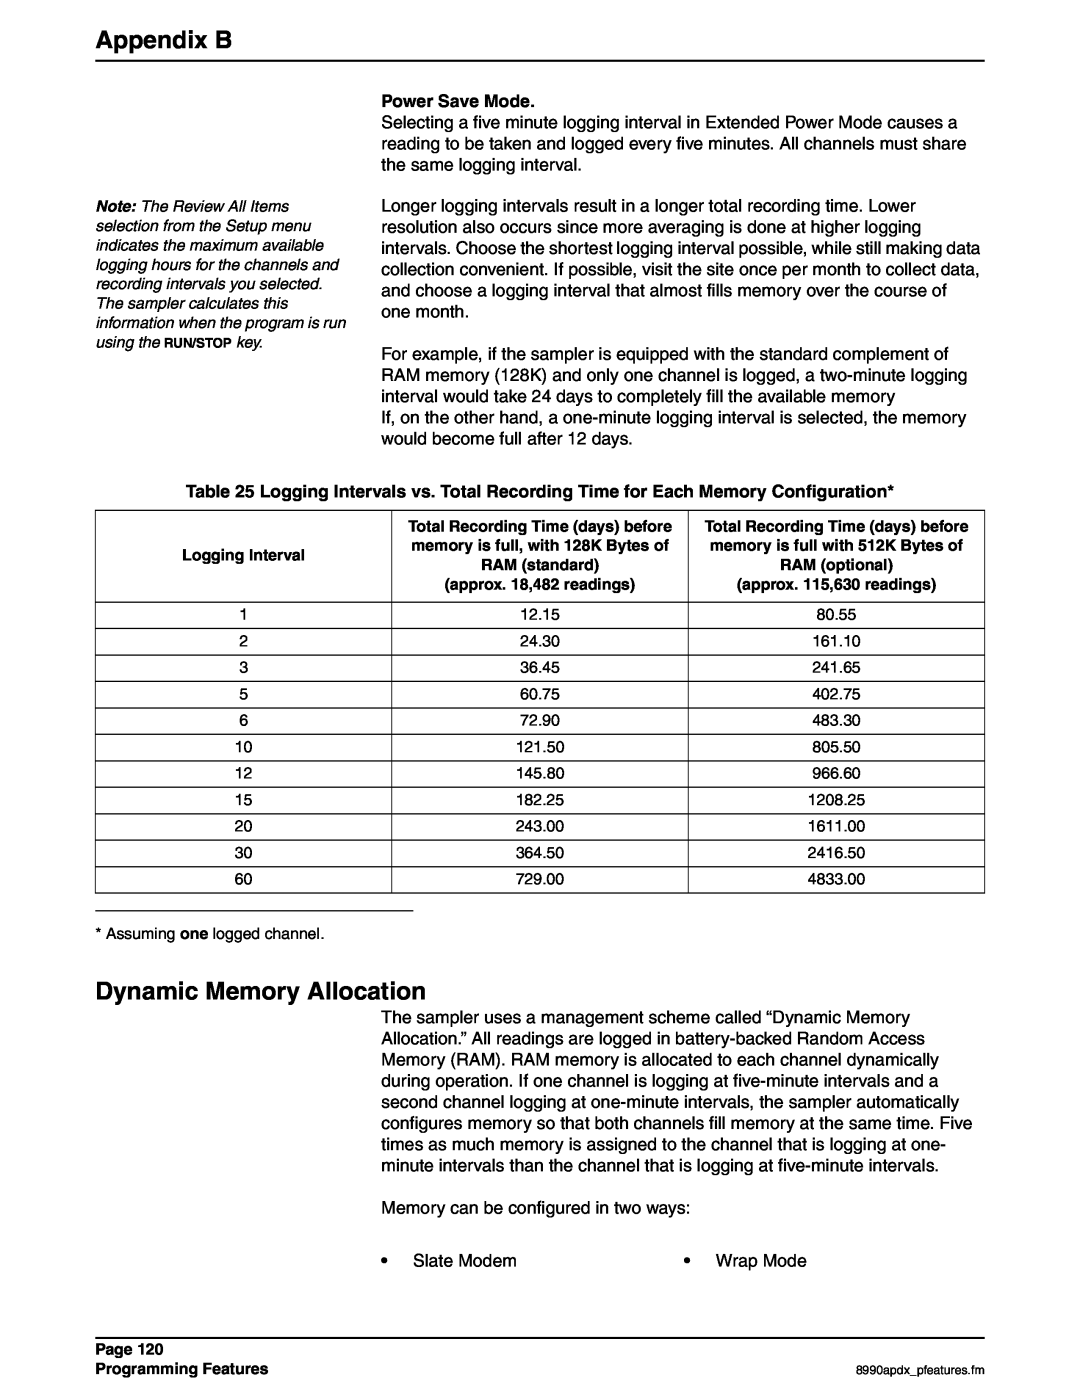 Hach 900 MAX manual Dynamic Memory Allocation, Appendix B, Power Save Mode, • Slate Modem, • Wrap Mode 